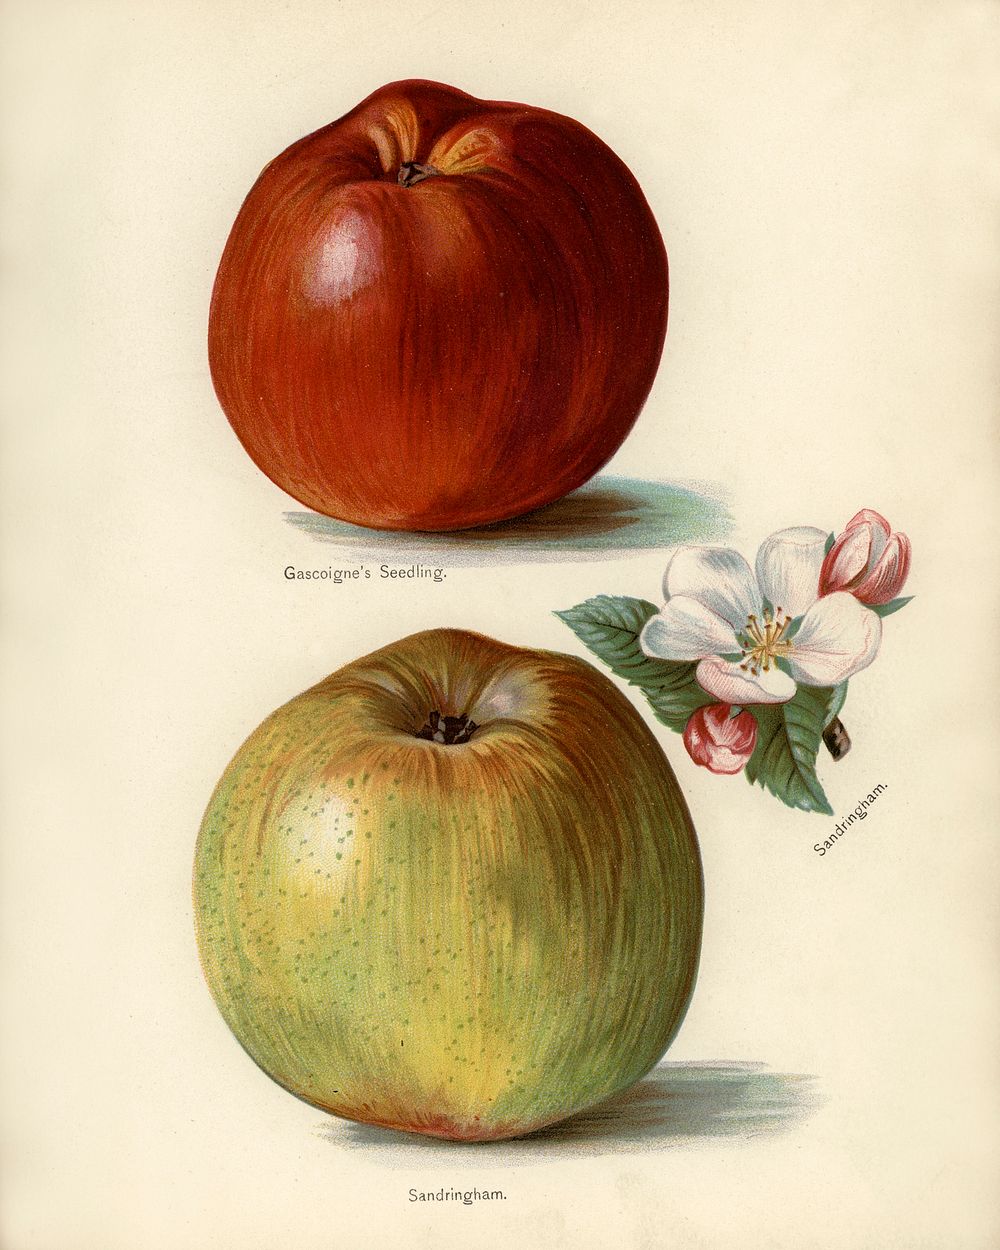 Vintage illustration of gascoigne's seedling, sandringham apples digitally enhanced from our own vintage edition of The…